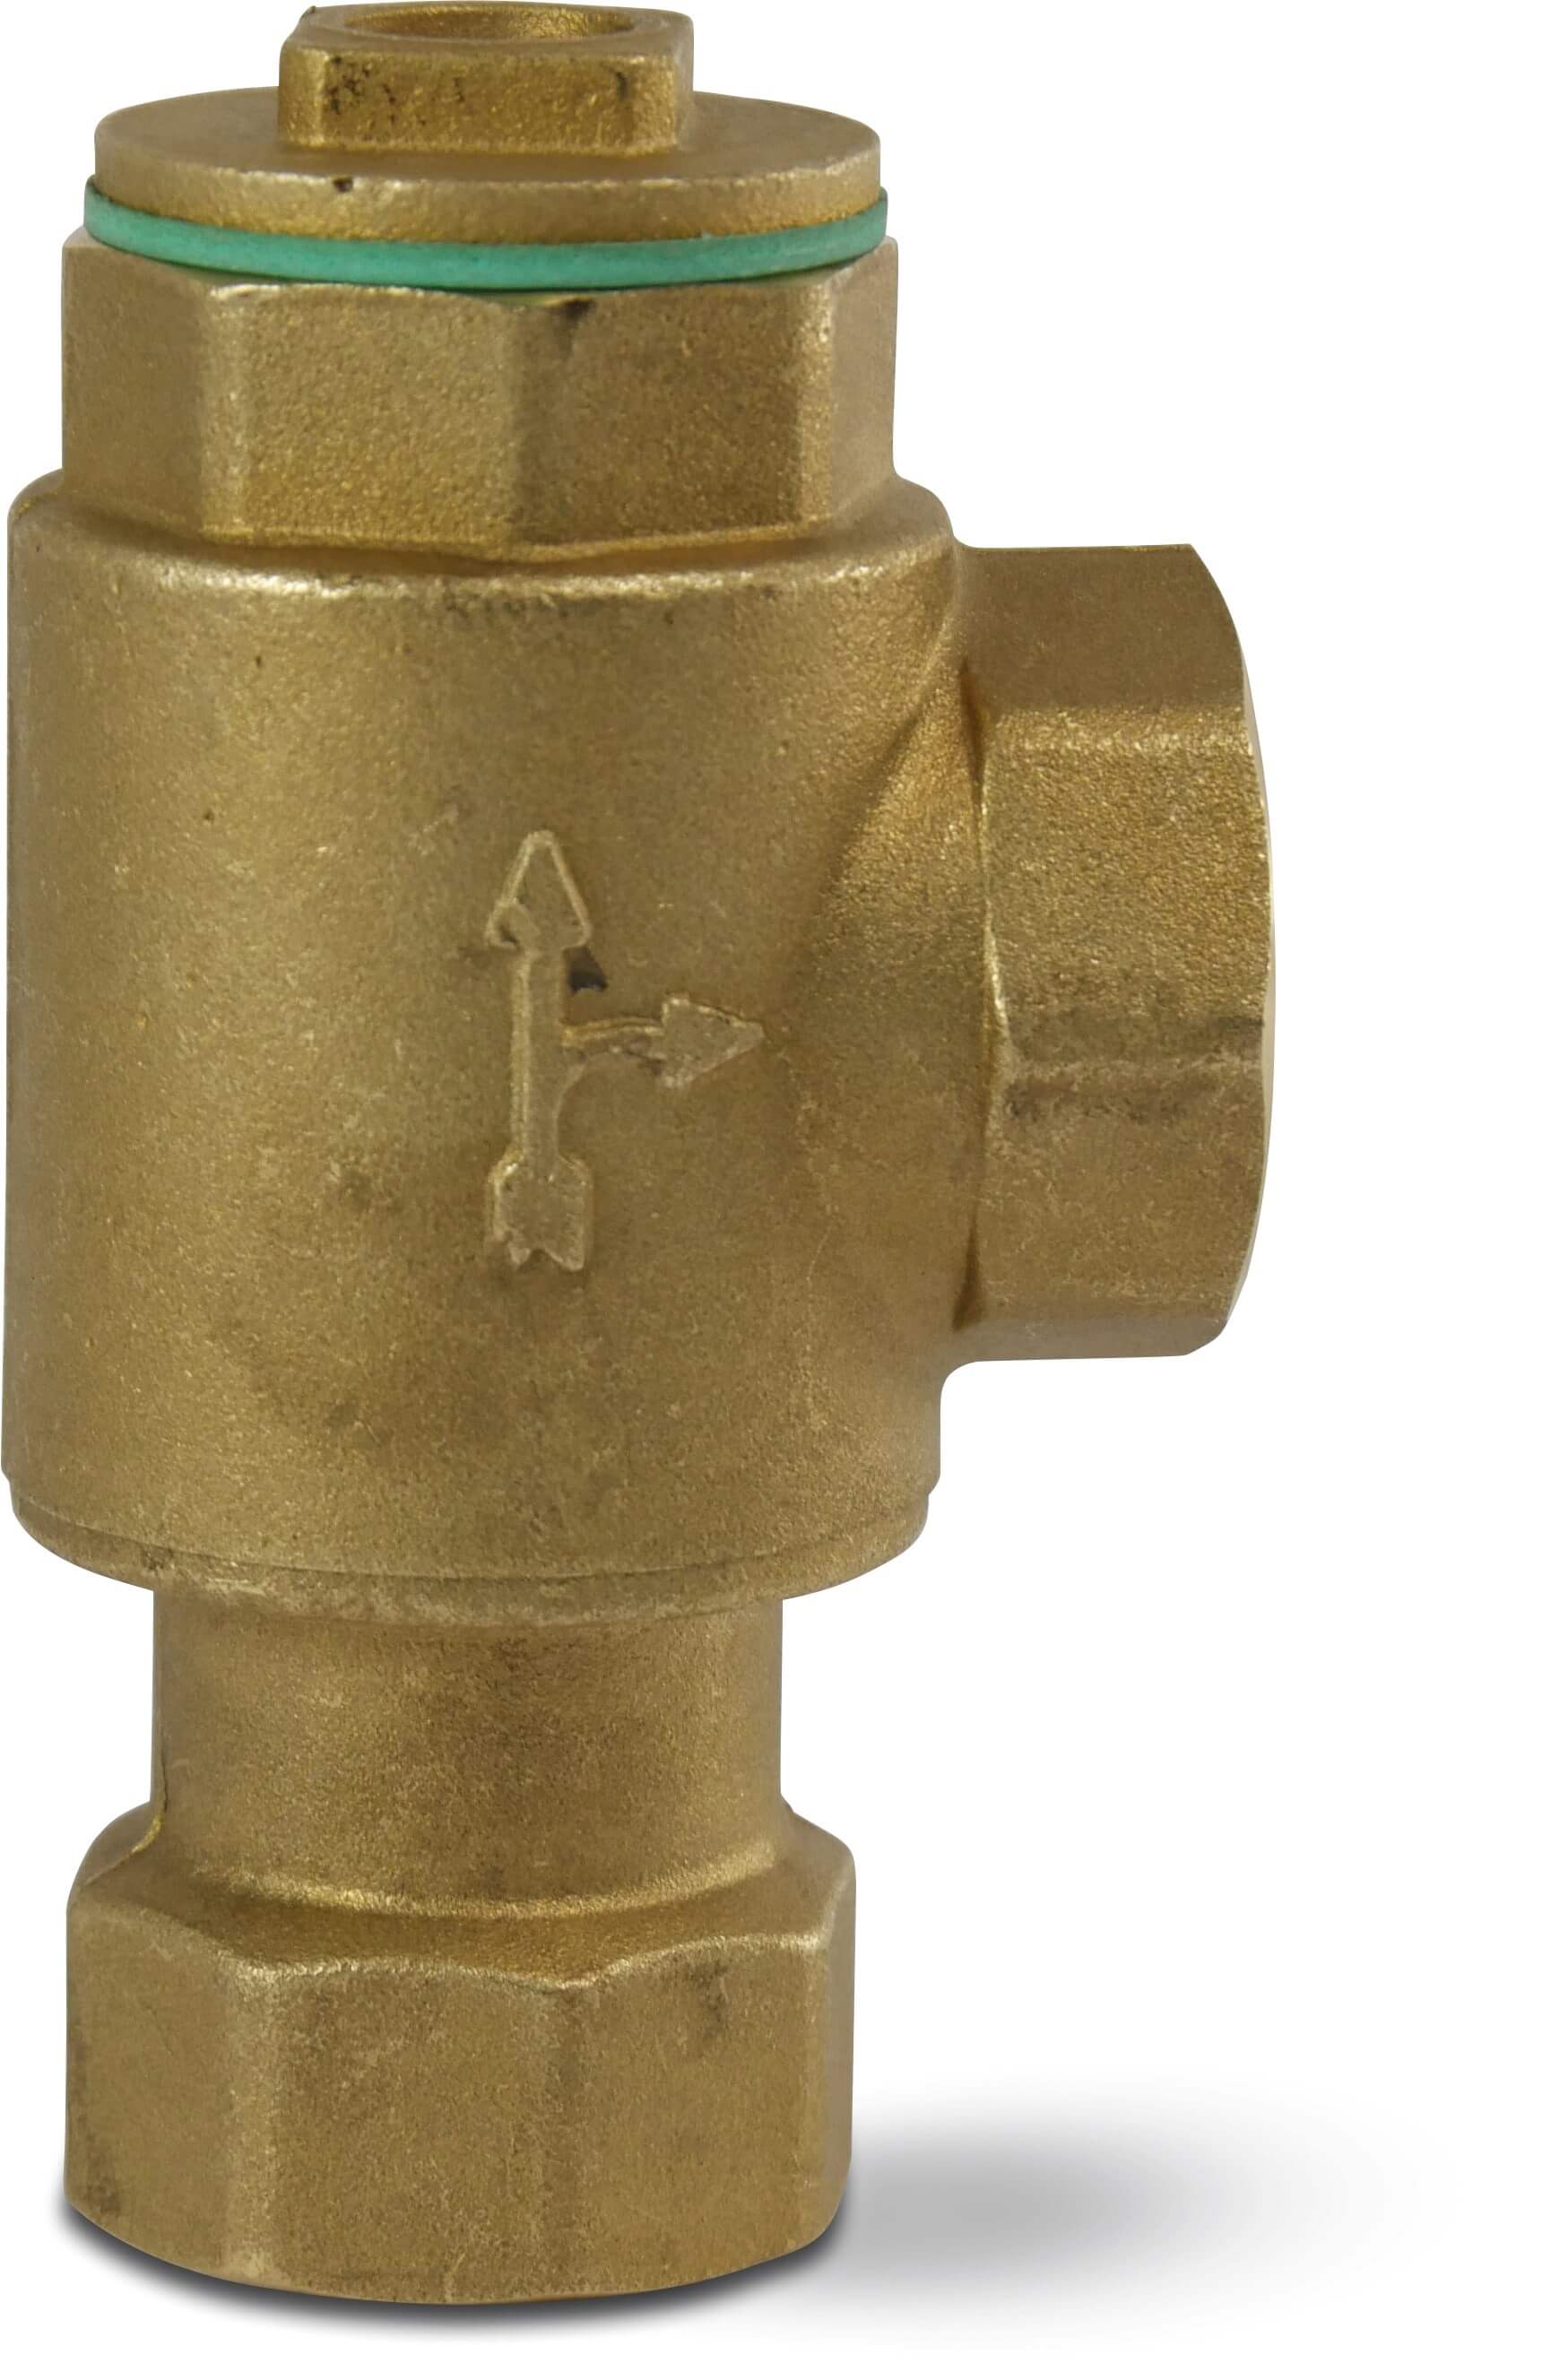 Non return valve brass 1" female thread 16bar type 35